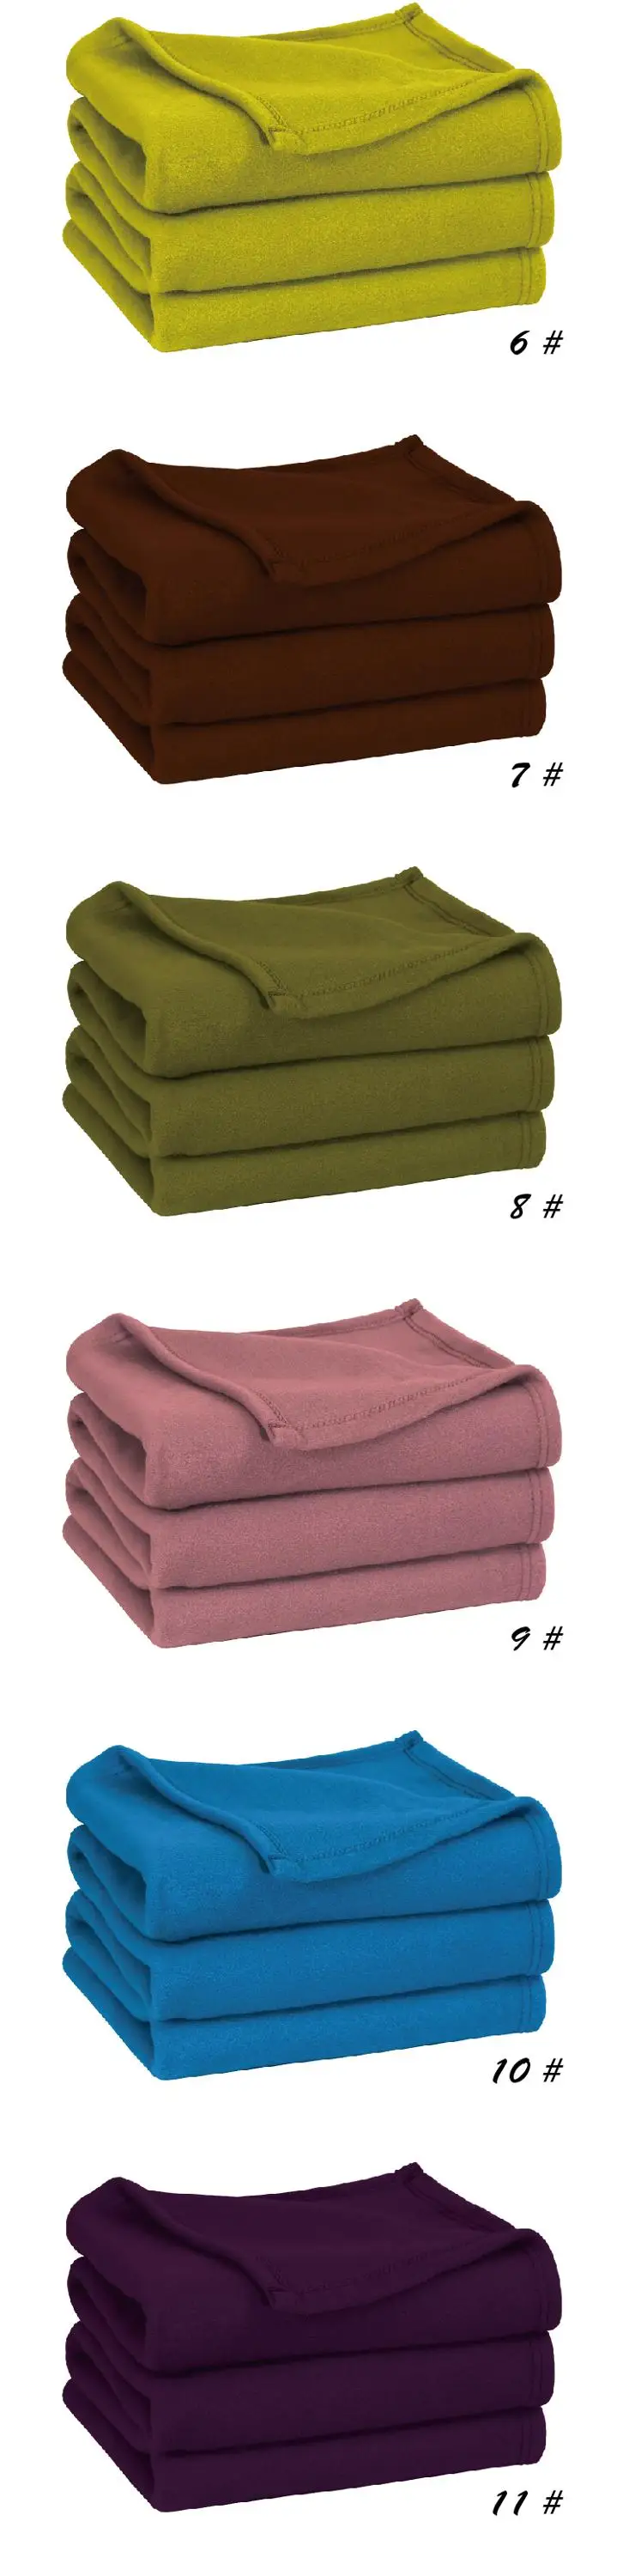 Polar-fleece Thermal Blanket Extra Soft Brush Fabric Super Warm Bed